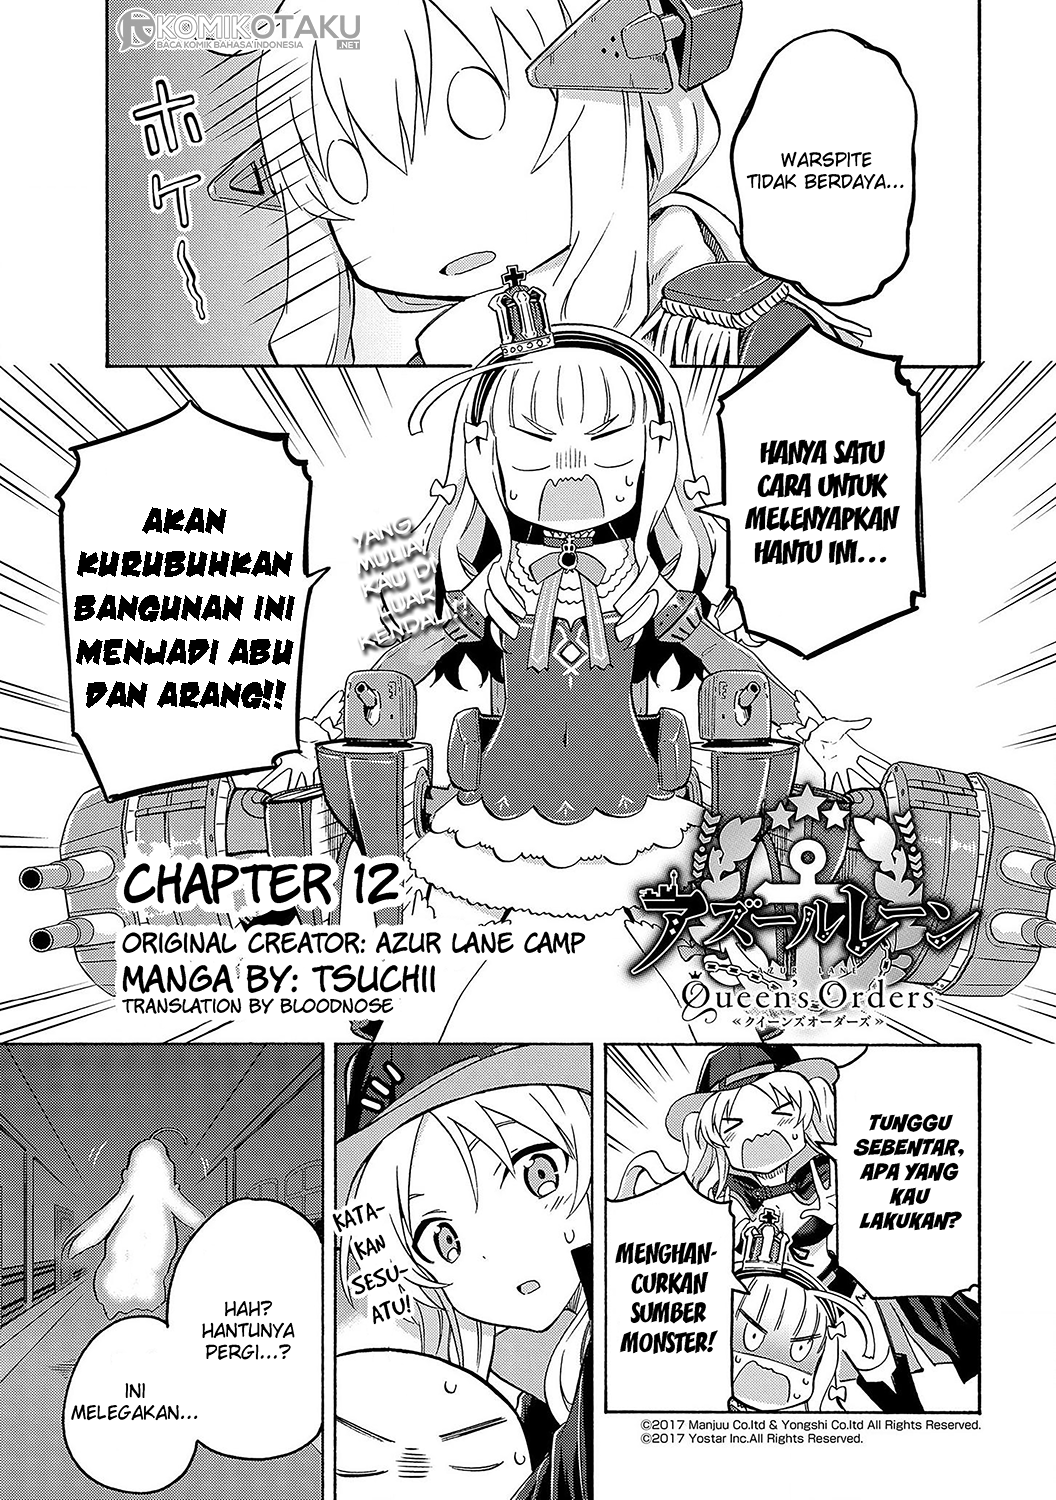 Baca Komik Azur Lane Queen's Orders Chapter 12 Gambar 1